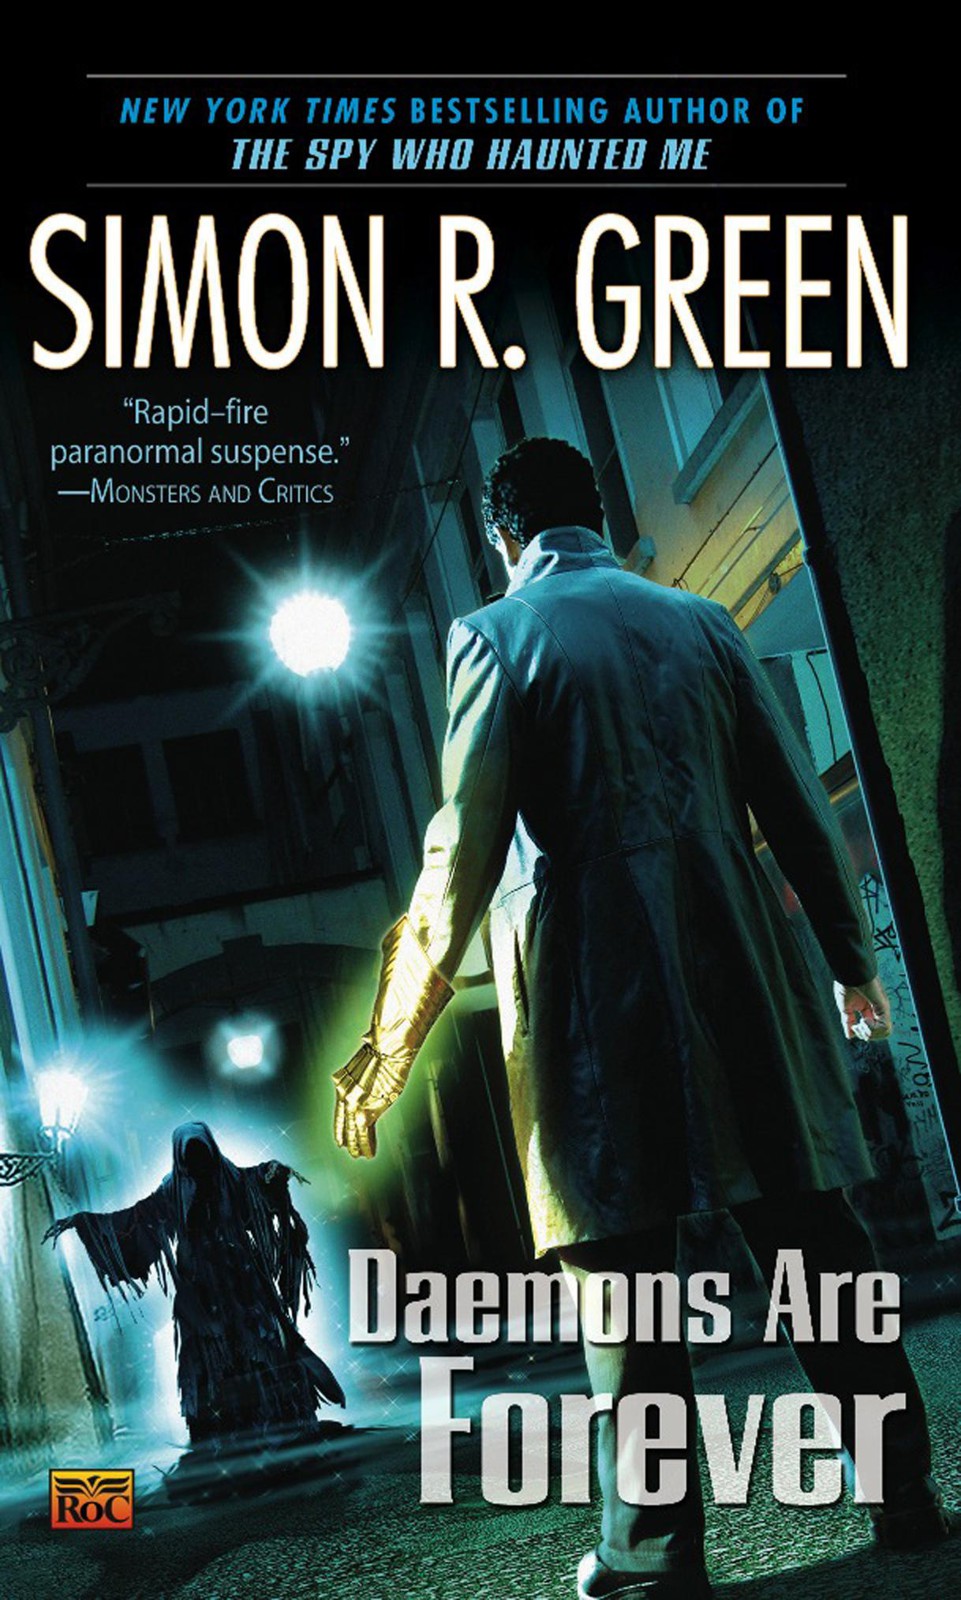 Book 2 - Daemons Are Forever